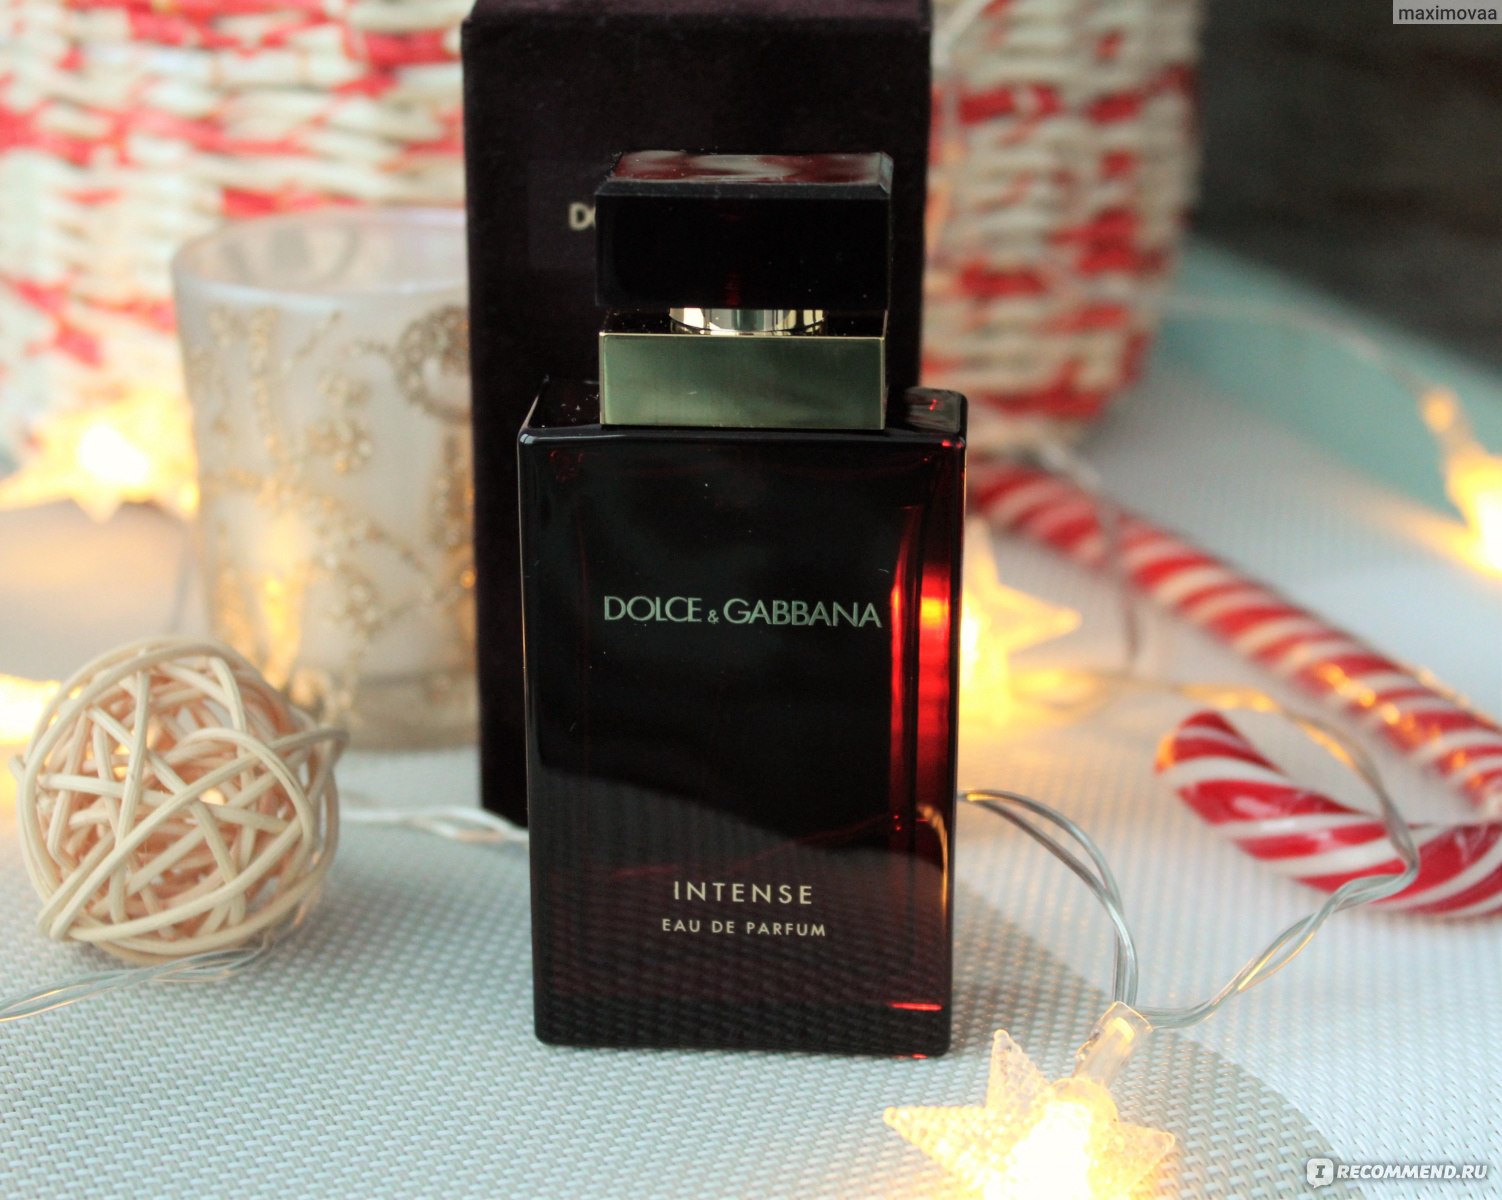 Дольче габбана интенс отзывы. Dolce&Gabbana -pour femme intense -2013. Delicate парфюмерная вода.